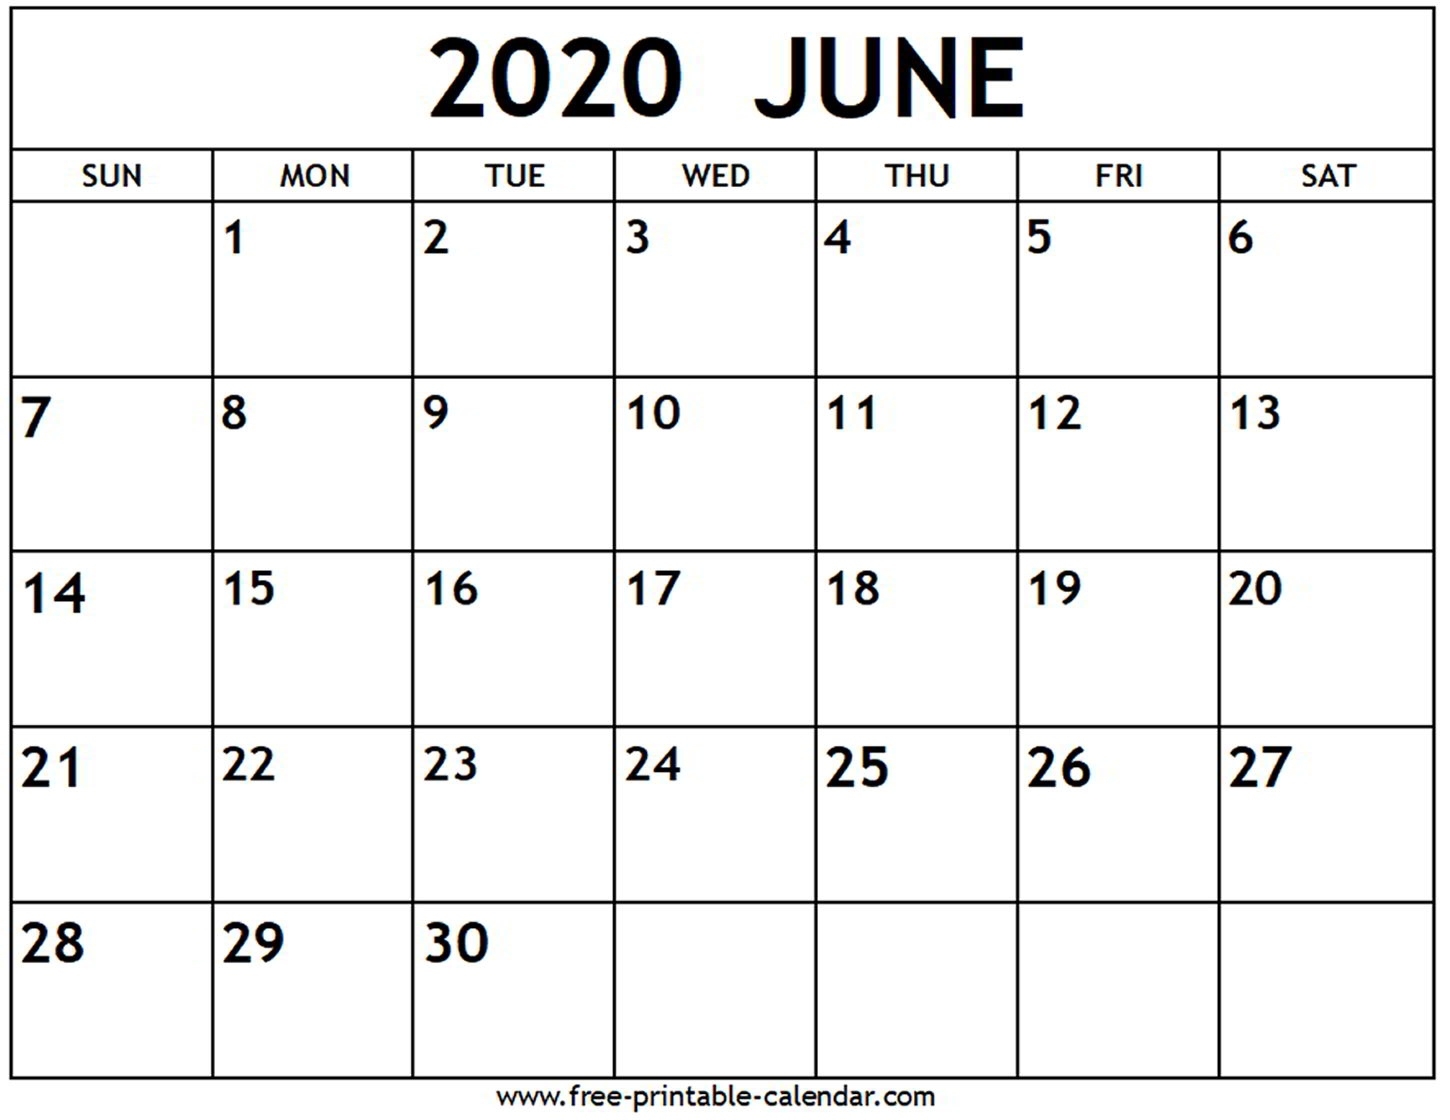 June 2020 Calendar - Free-Printable-Calendar Incredible June 2020 Calendar With Holidays